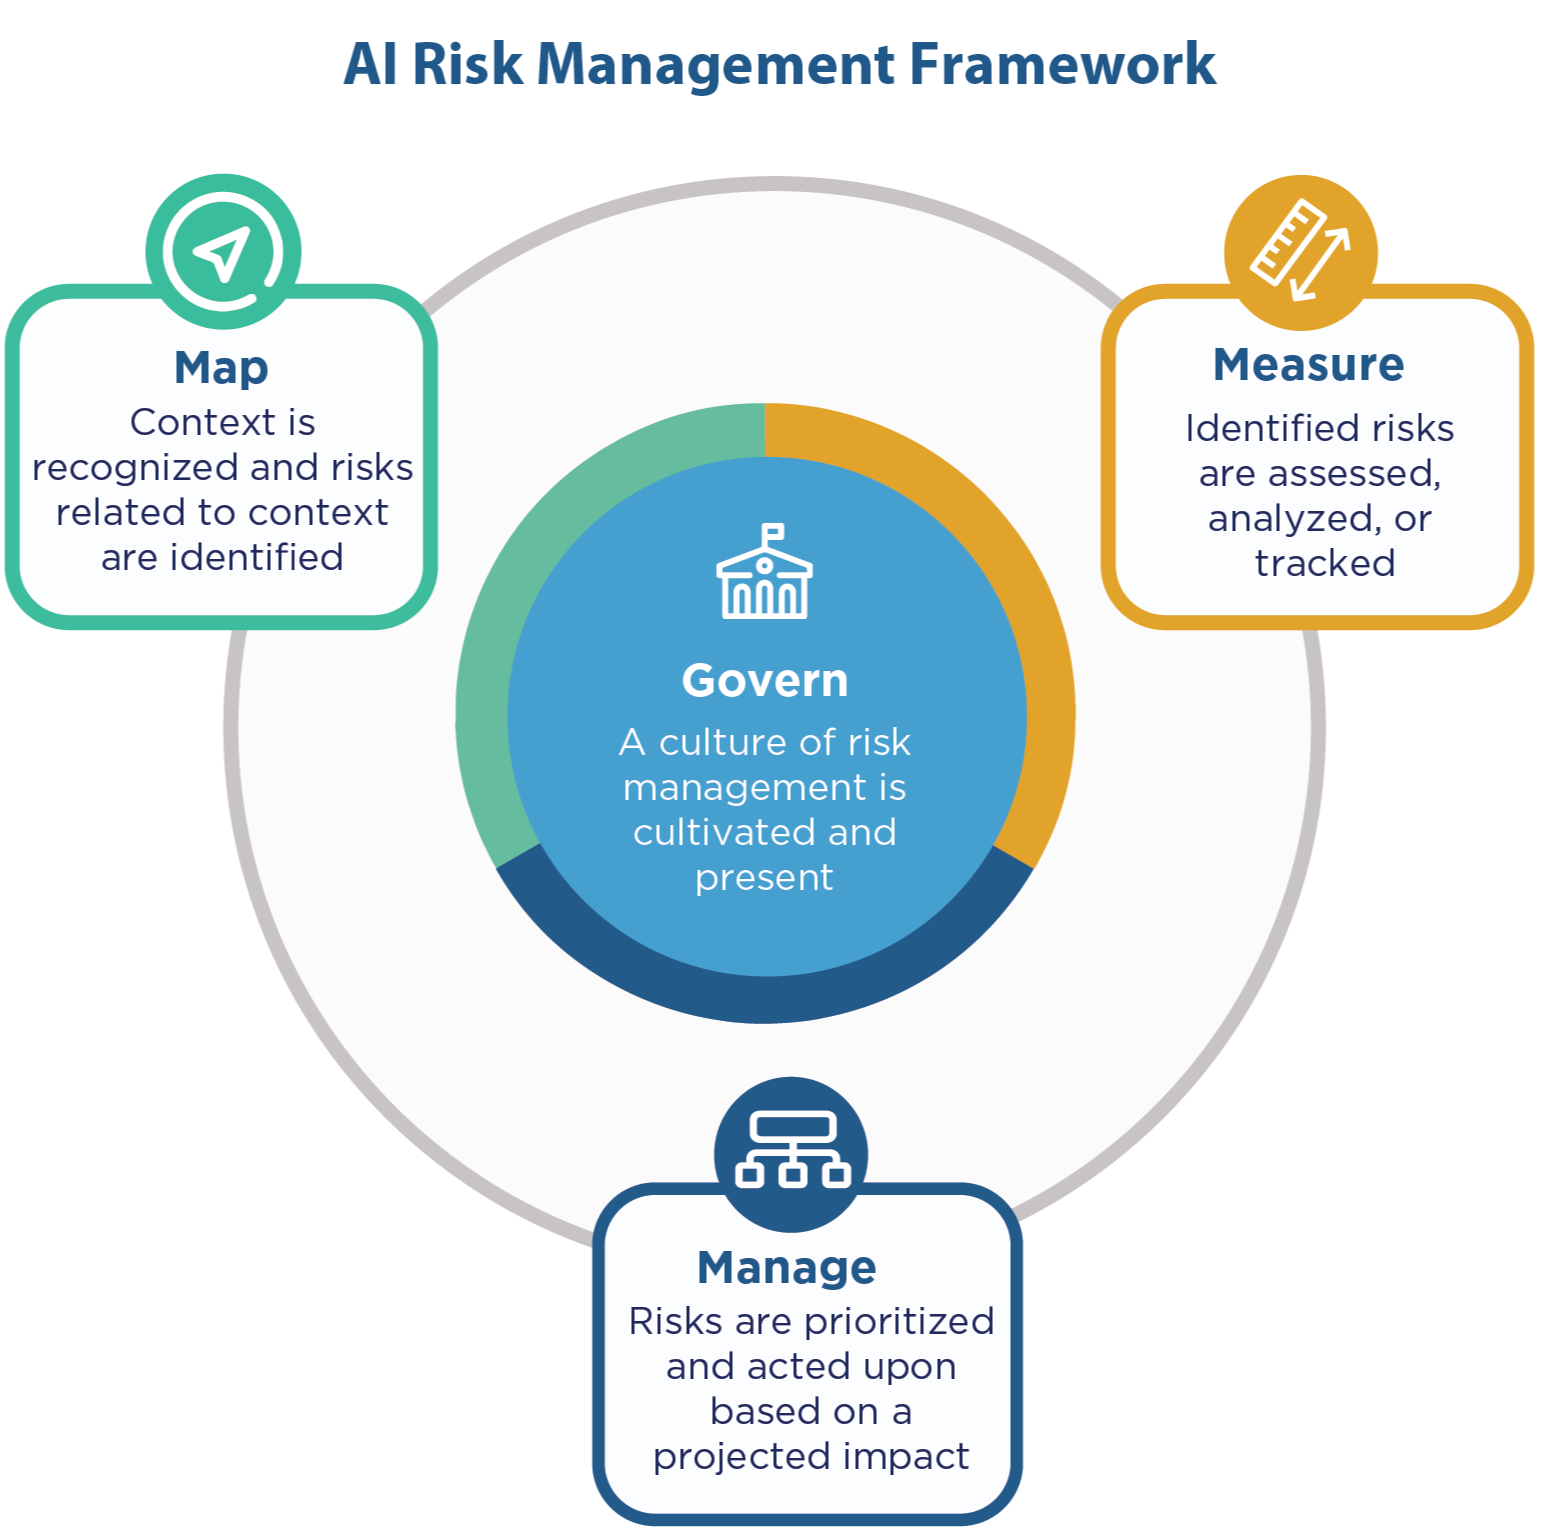 Functions organize AI risk management activities